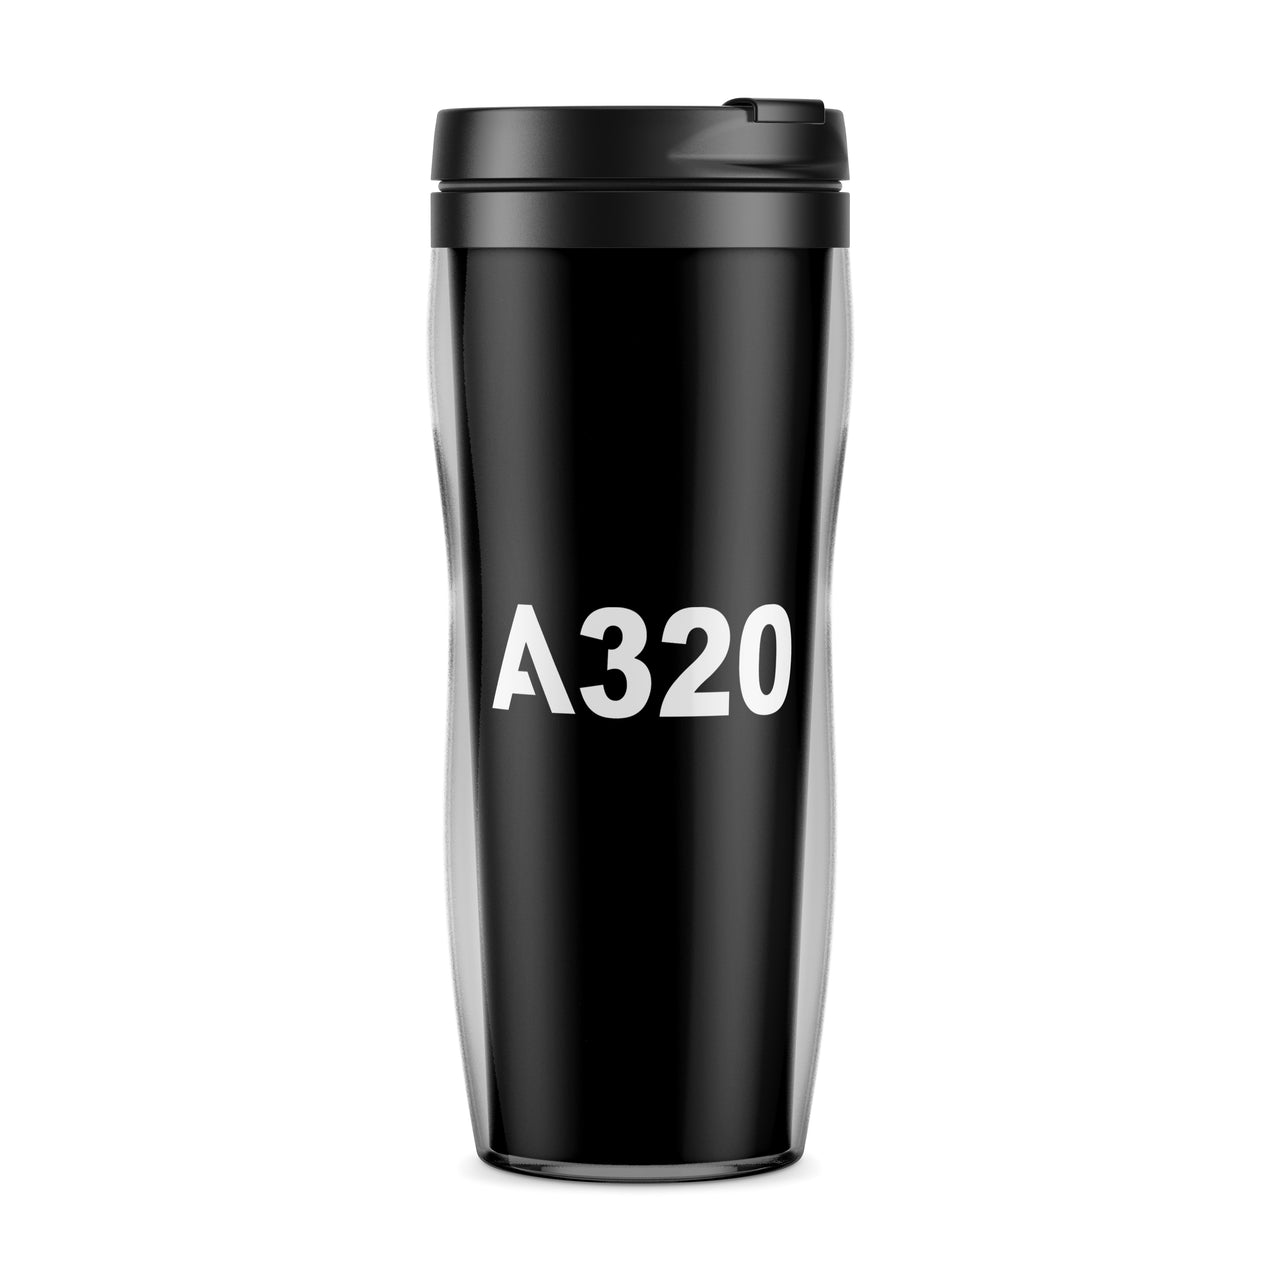 A320 Flat Text Designed Travel Mugs